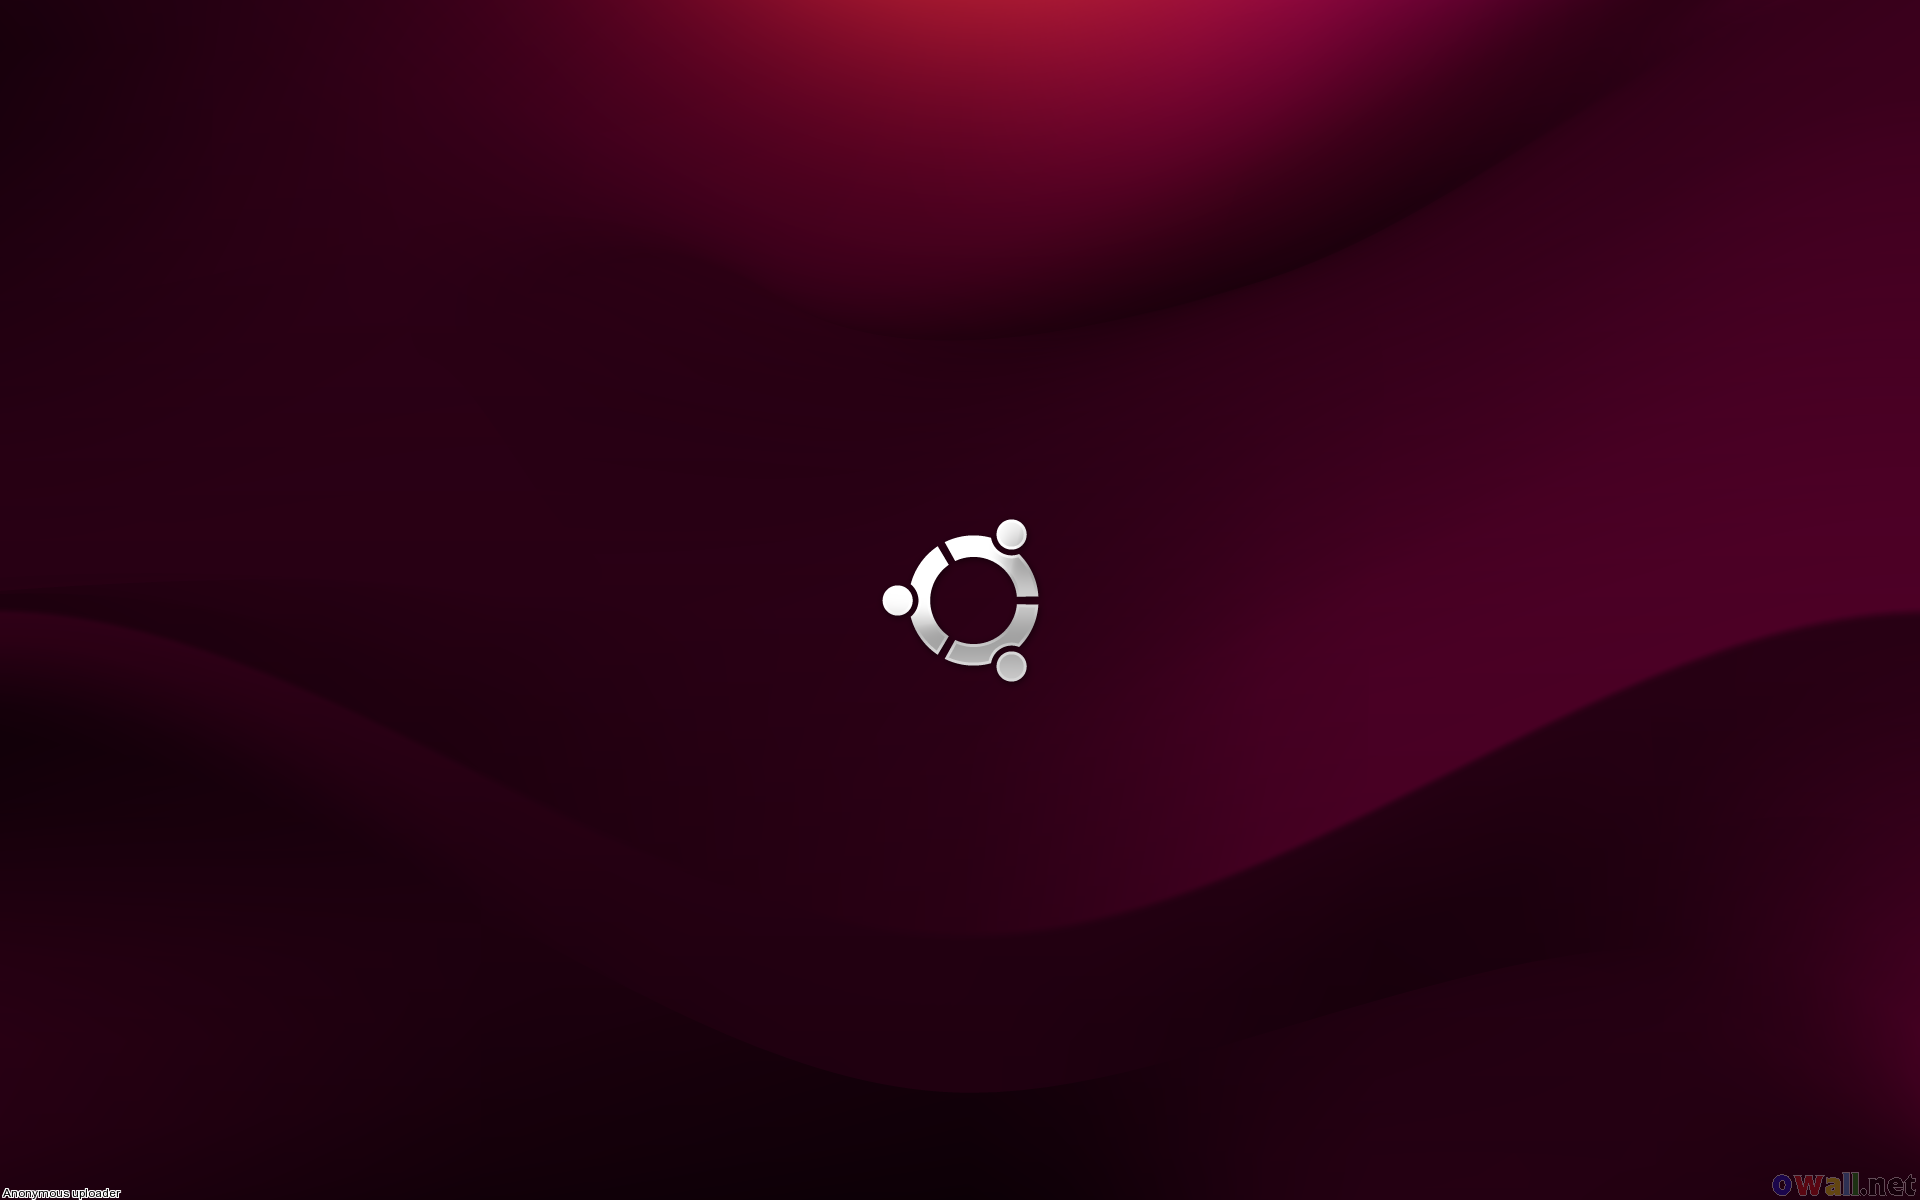  linux ubuntu wallpaper desktop backgrounds download wallpaper hd